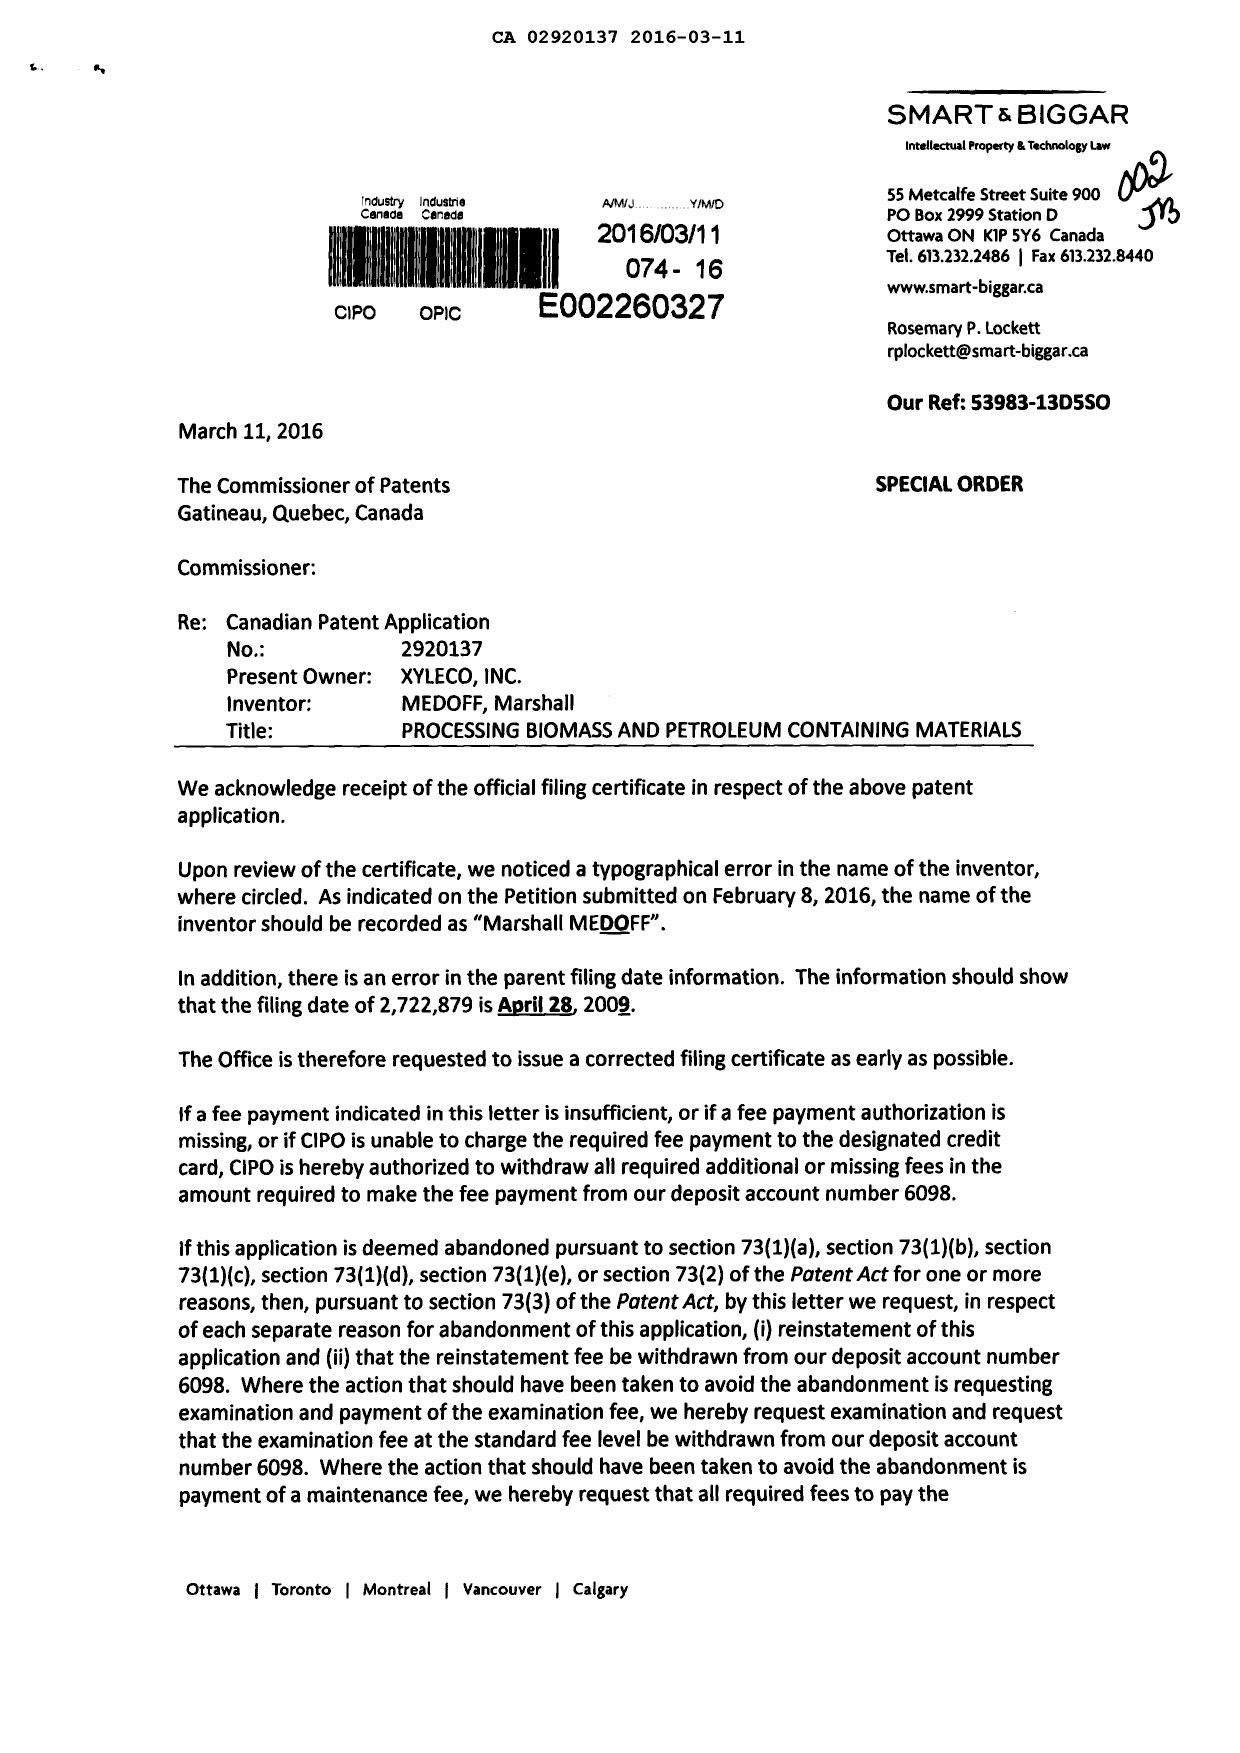 Canadian Patent Document 2920137. Correspondence 20151211. Image 1 of 3